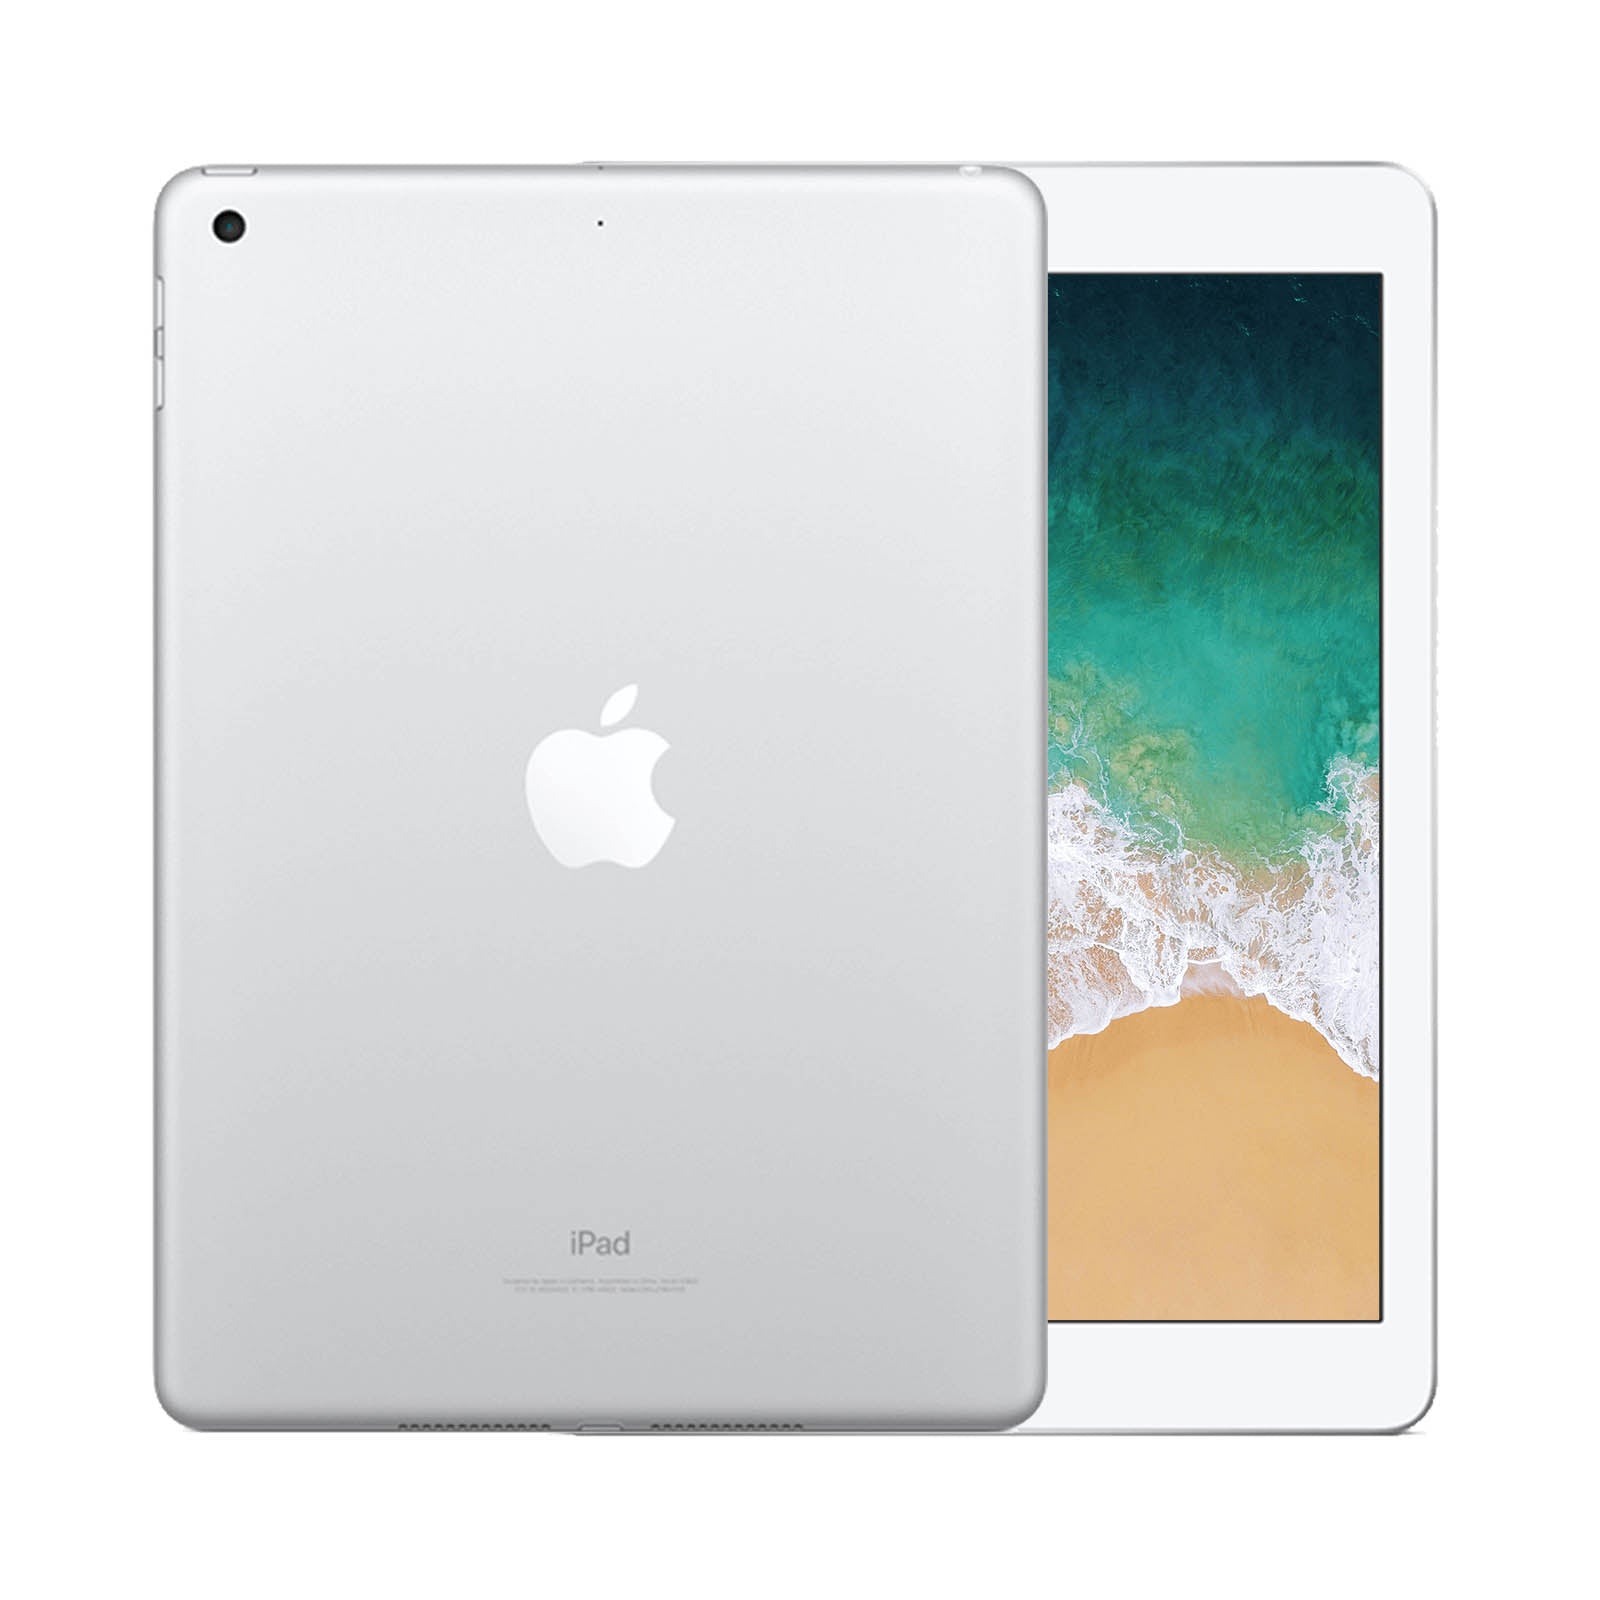 Apple iPad 5 128GB WiFi Silver - Very Good 128GB Silver Very Good